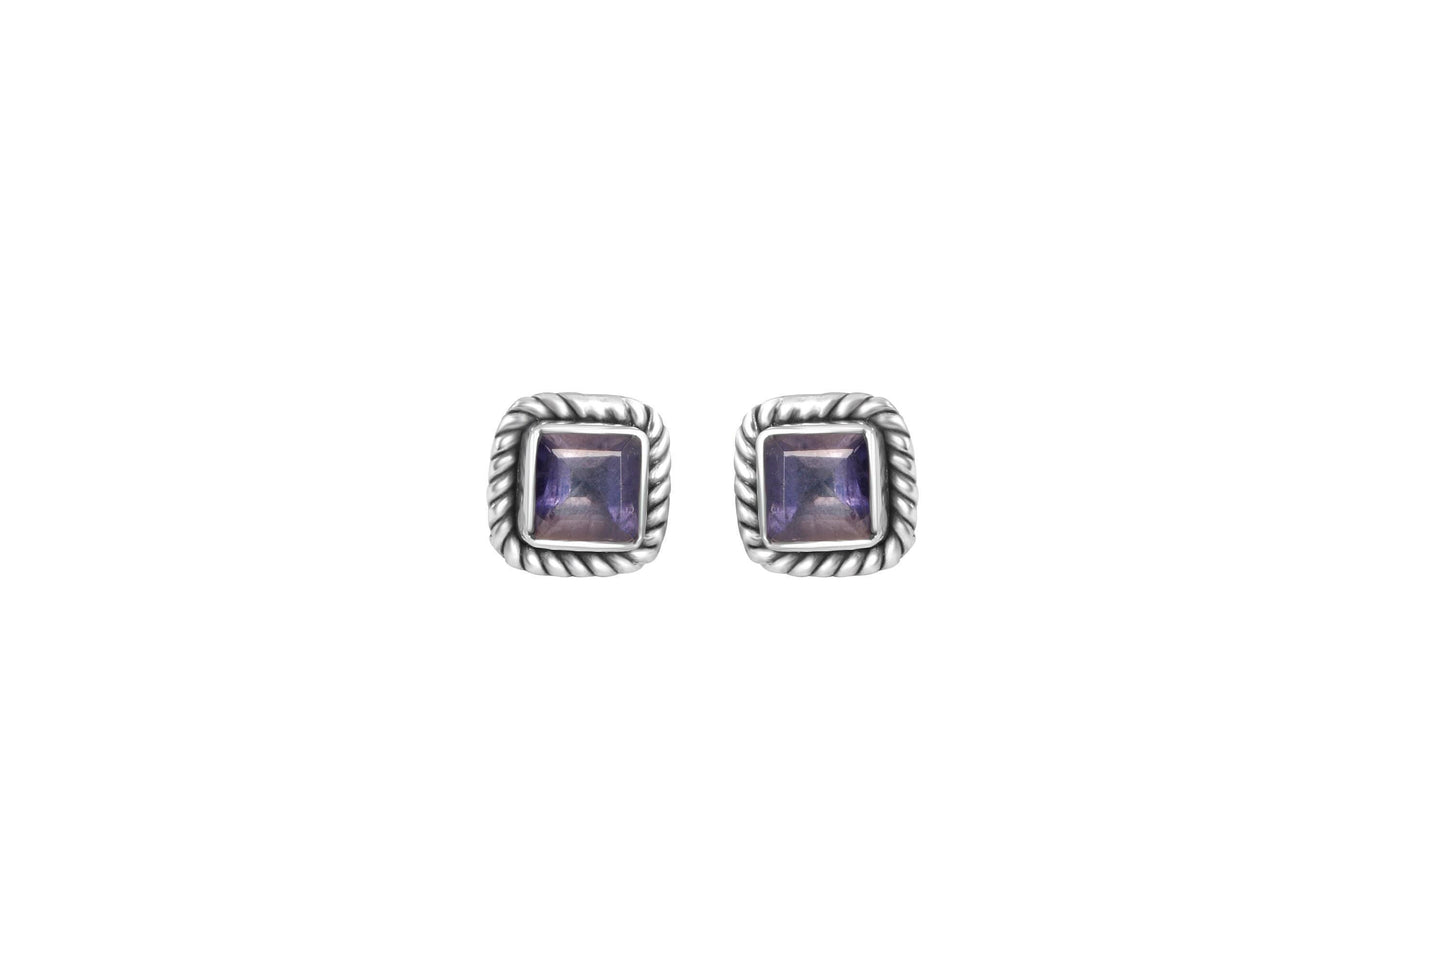 Genuine Iolite Square Gemstones 925 Oxidized Sterling SILVER Stud Earrings, Libra, Sagittarius Taurus Zodiac, September Birthstone Australia, Zorbajewellers